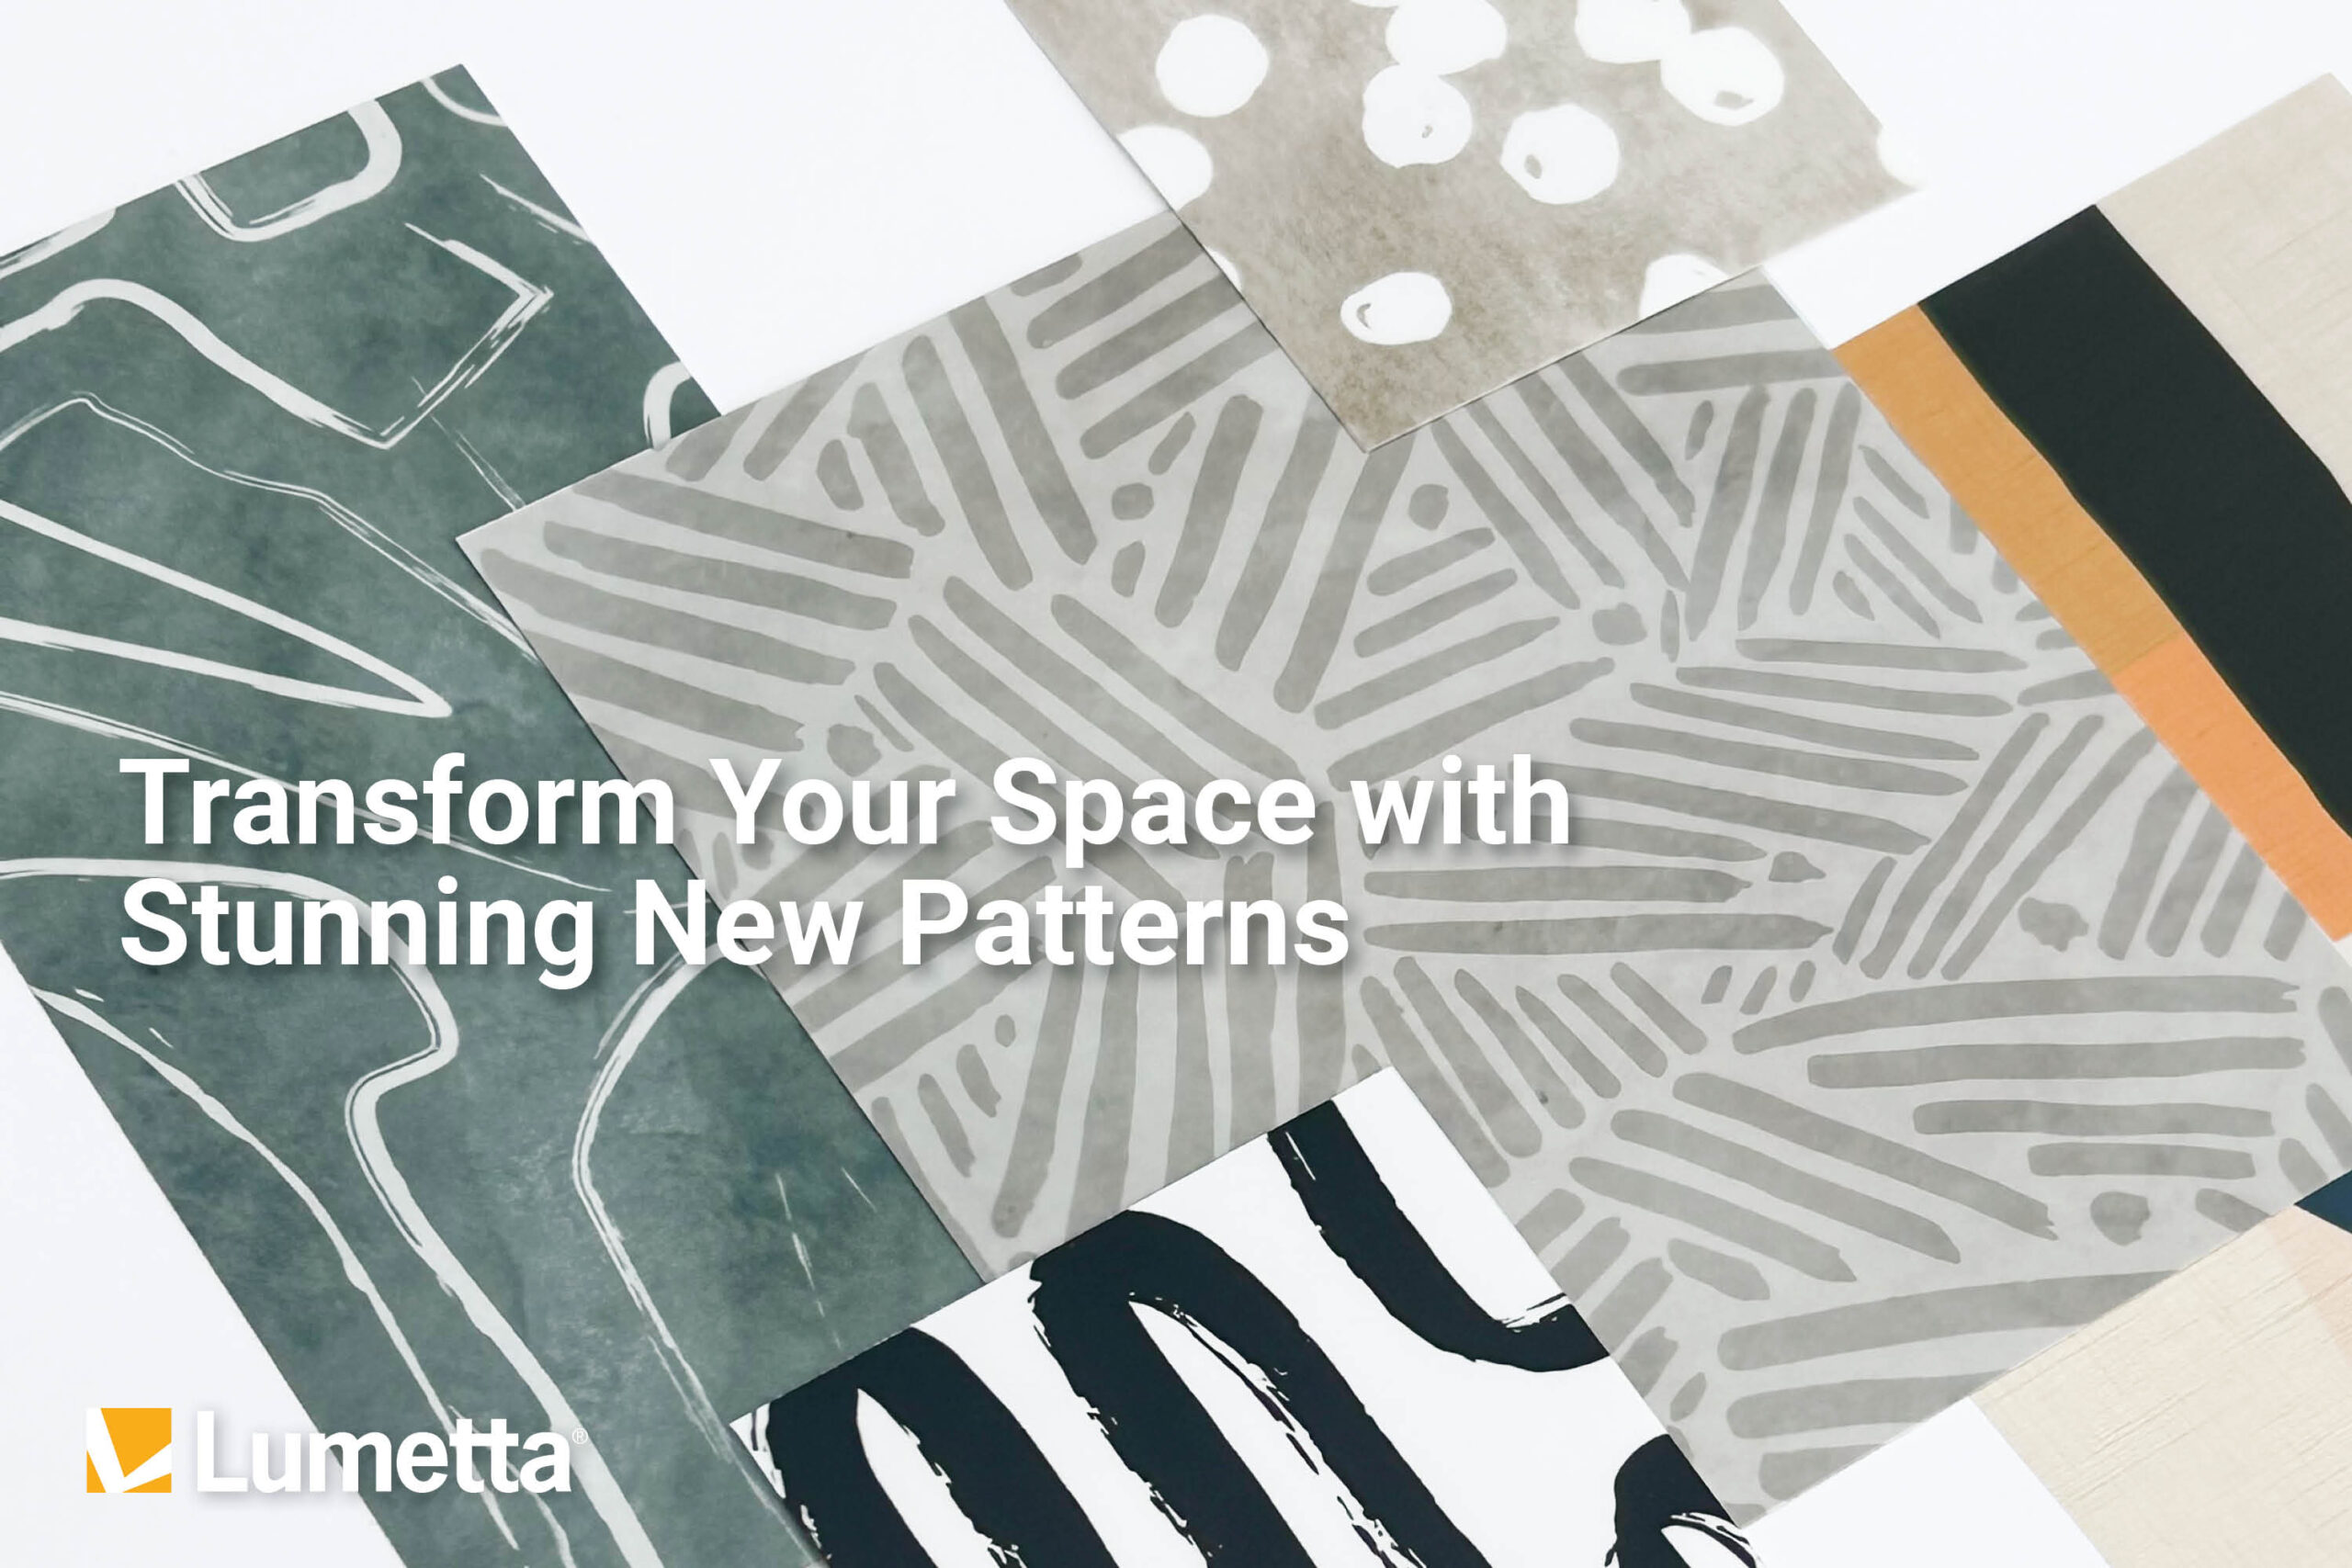 Lumetta Introduces New Design Lumenate® Patterns